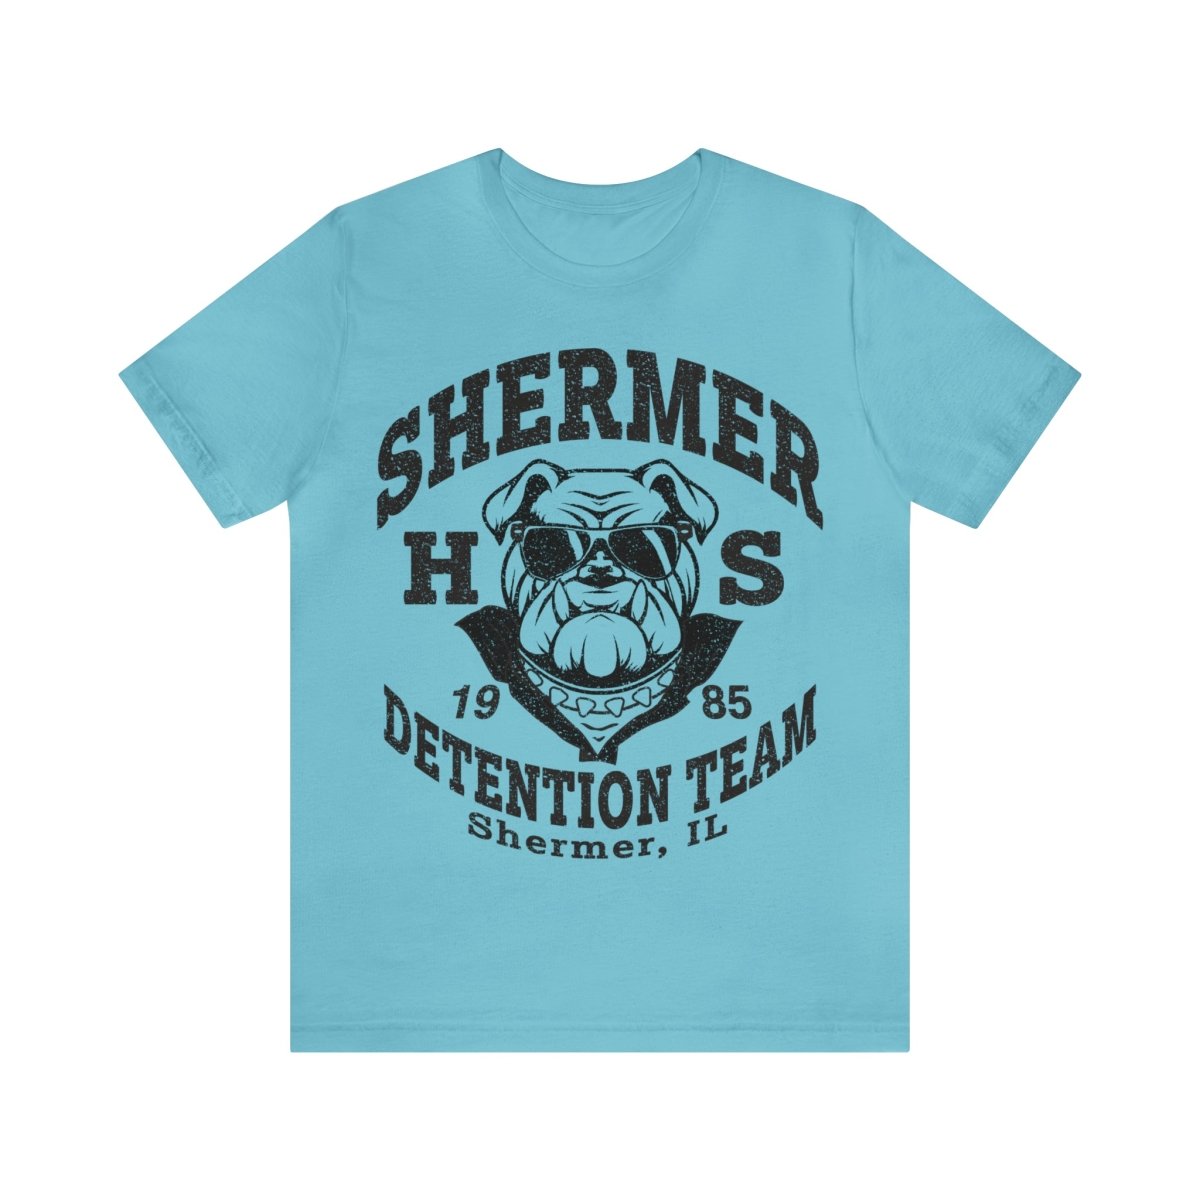 Shermer HS Detention Premium T-Shirt, Library Meeting, High School Nostalgia